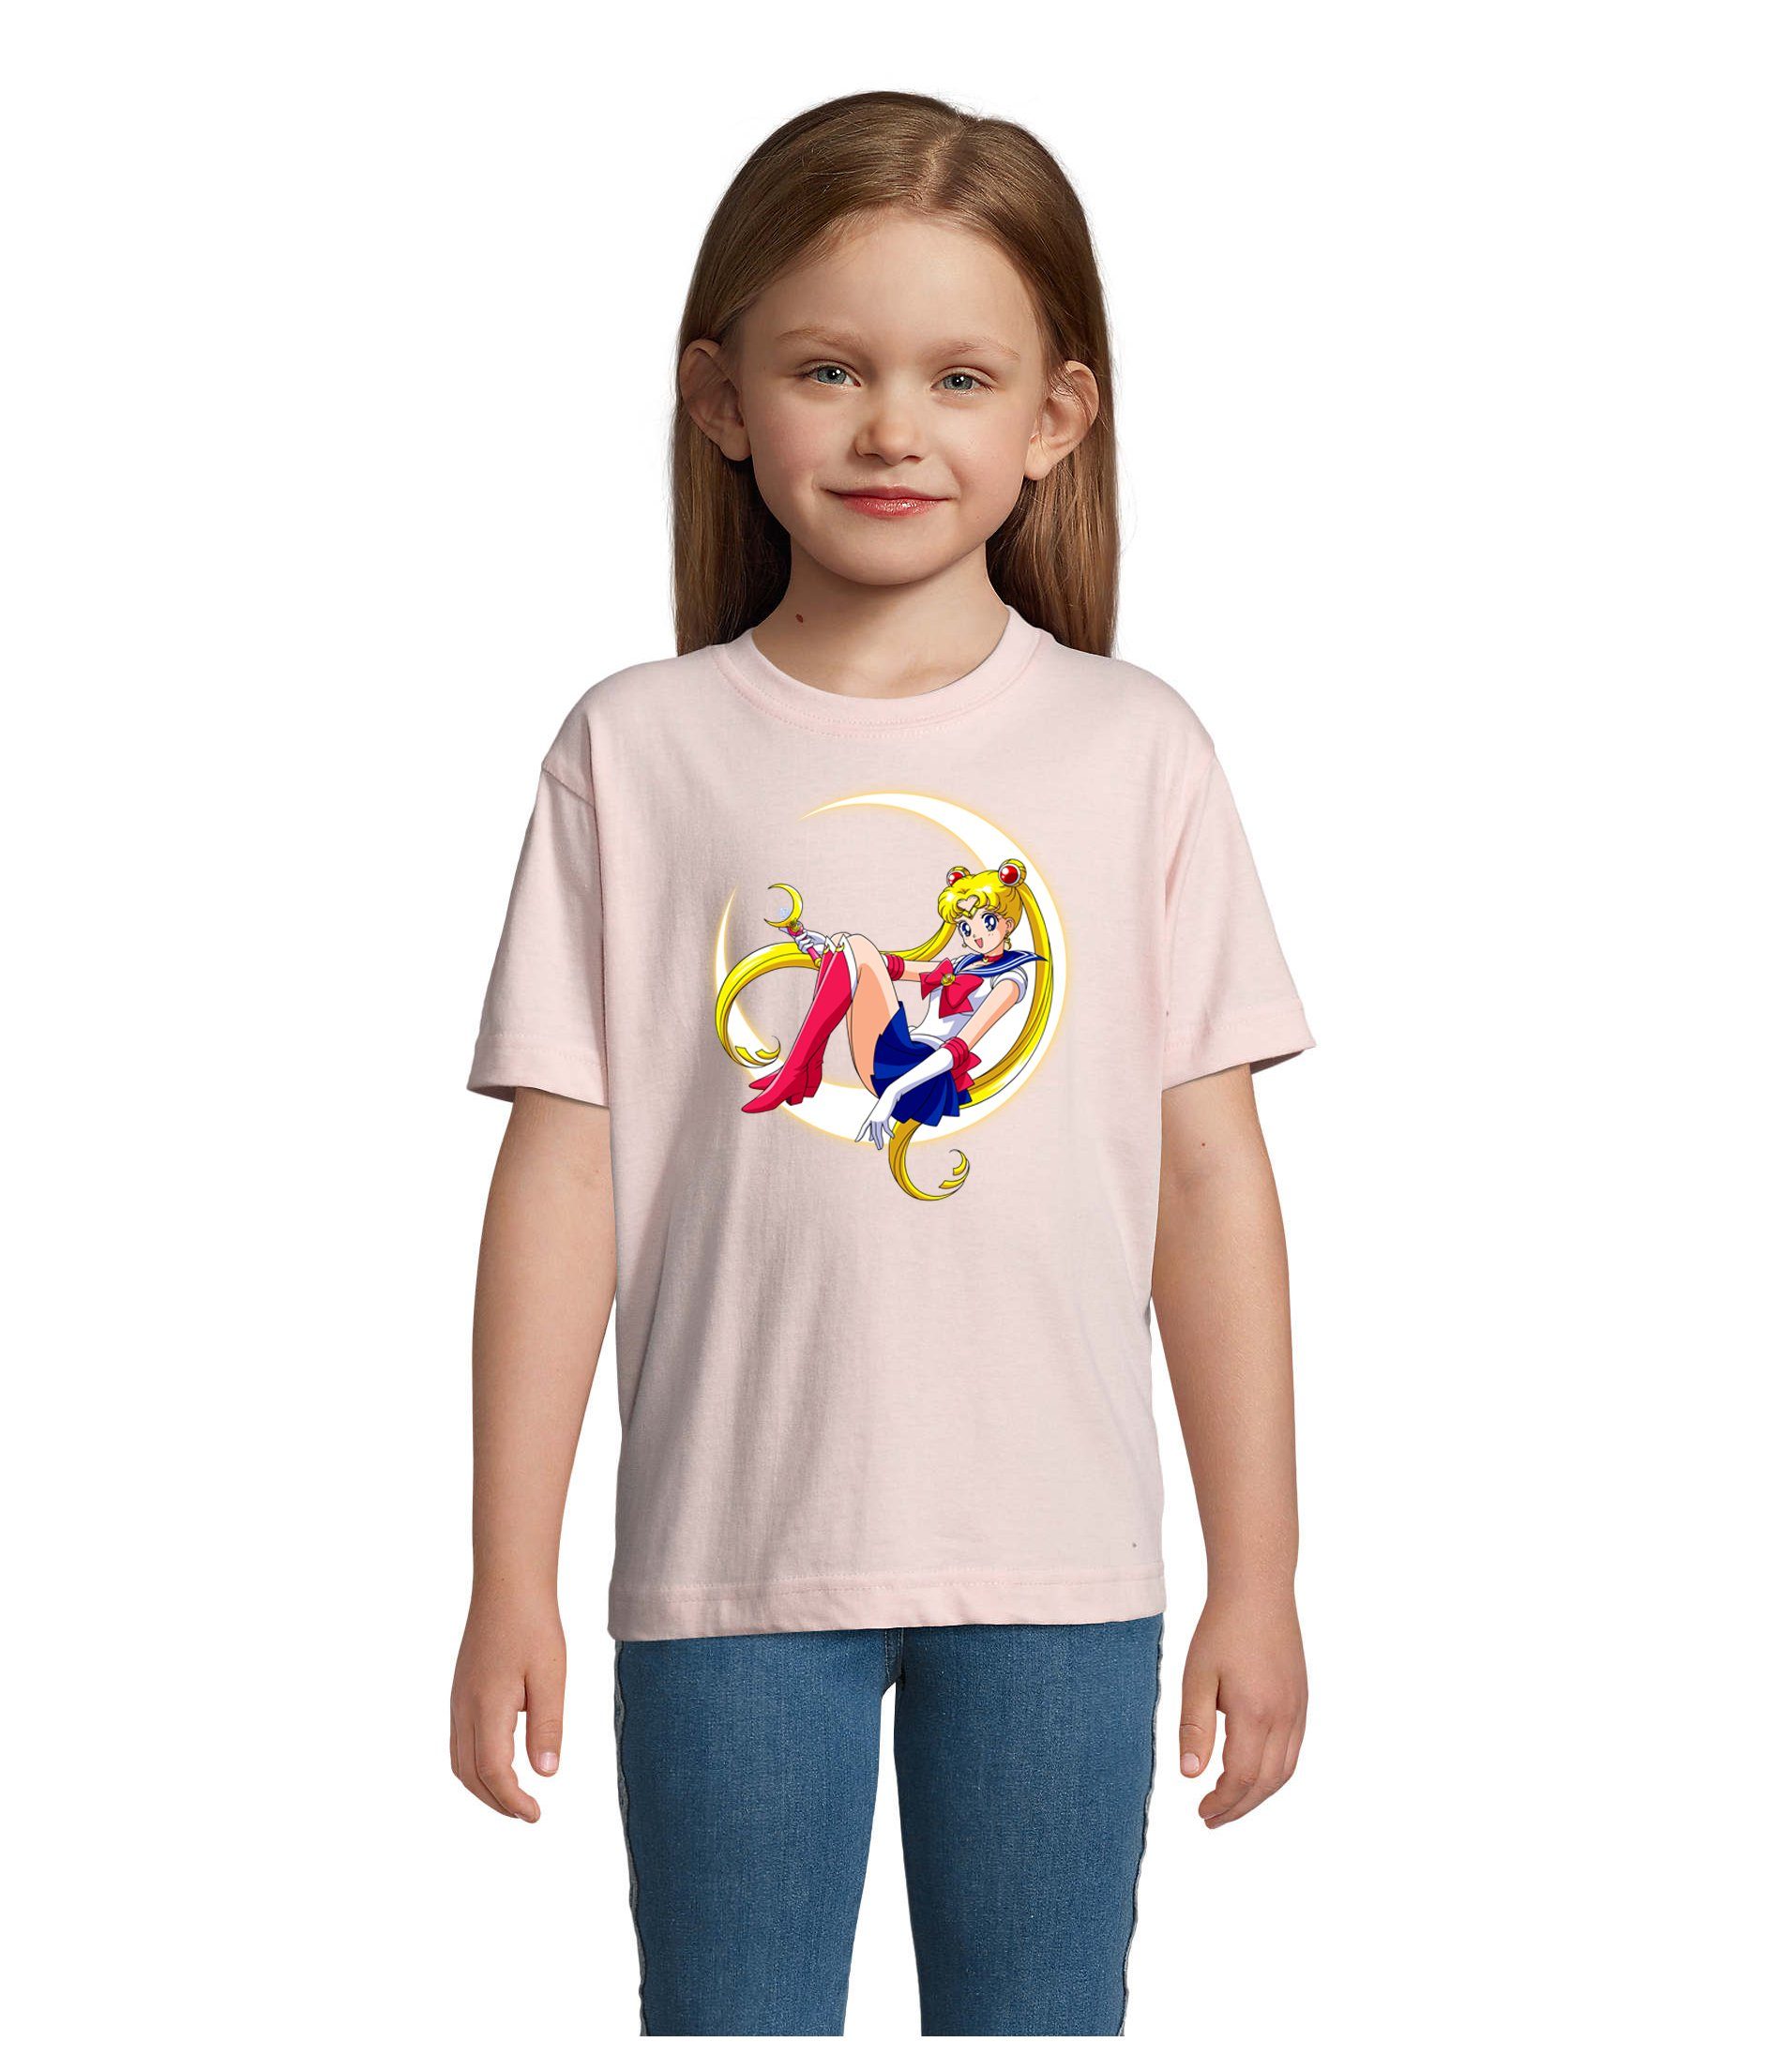 Blondie & Brownie T-Shirt Mädchen Jungen Kinder Fun Comic Sailor Moon Anime Manga